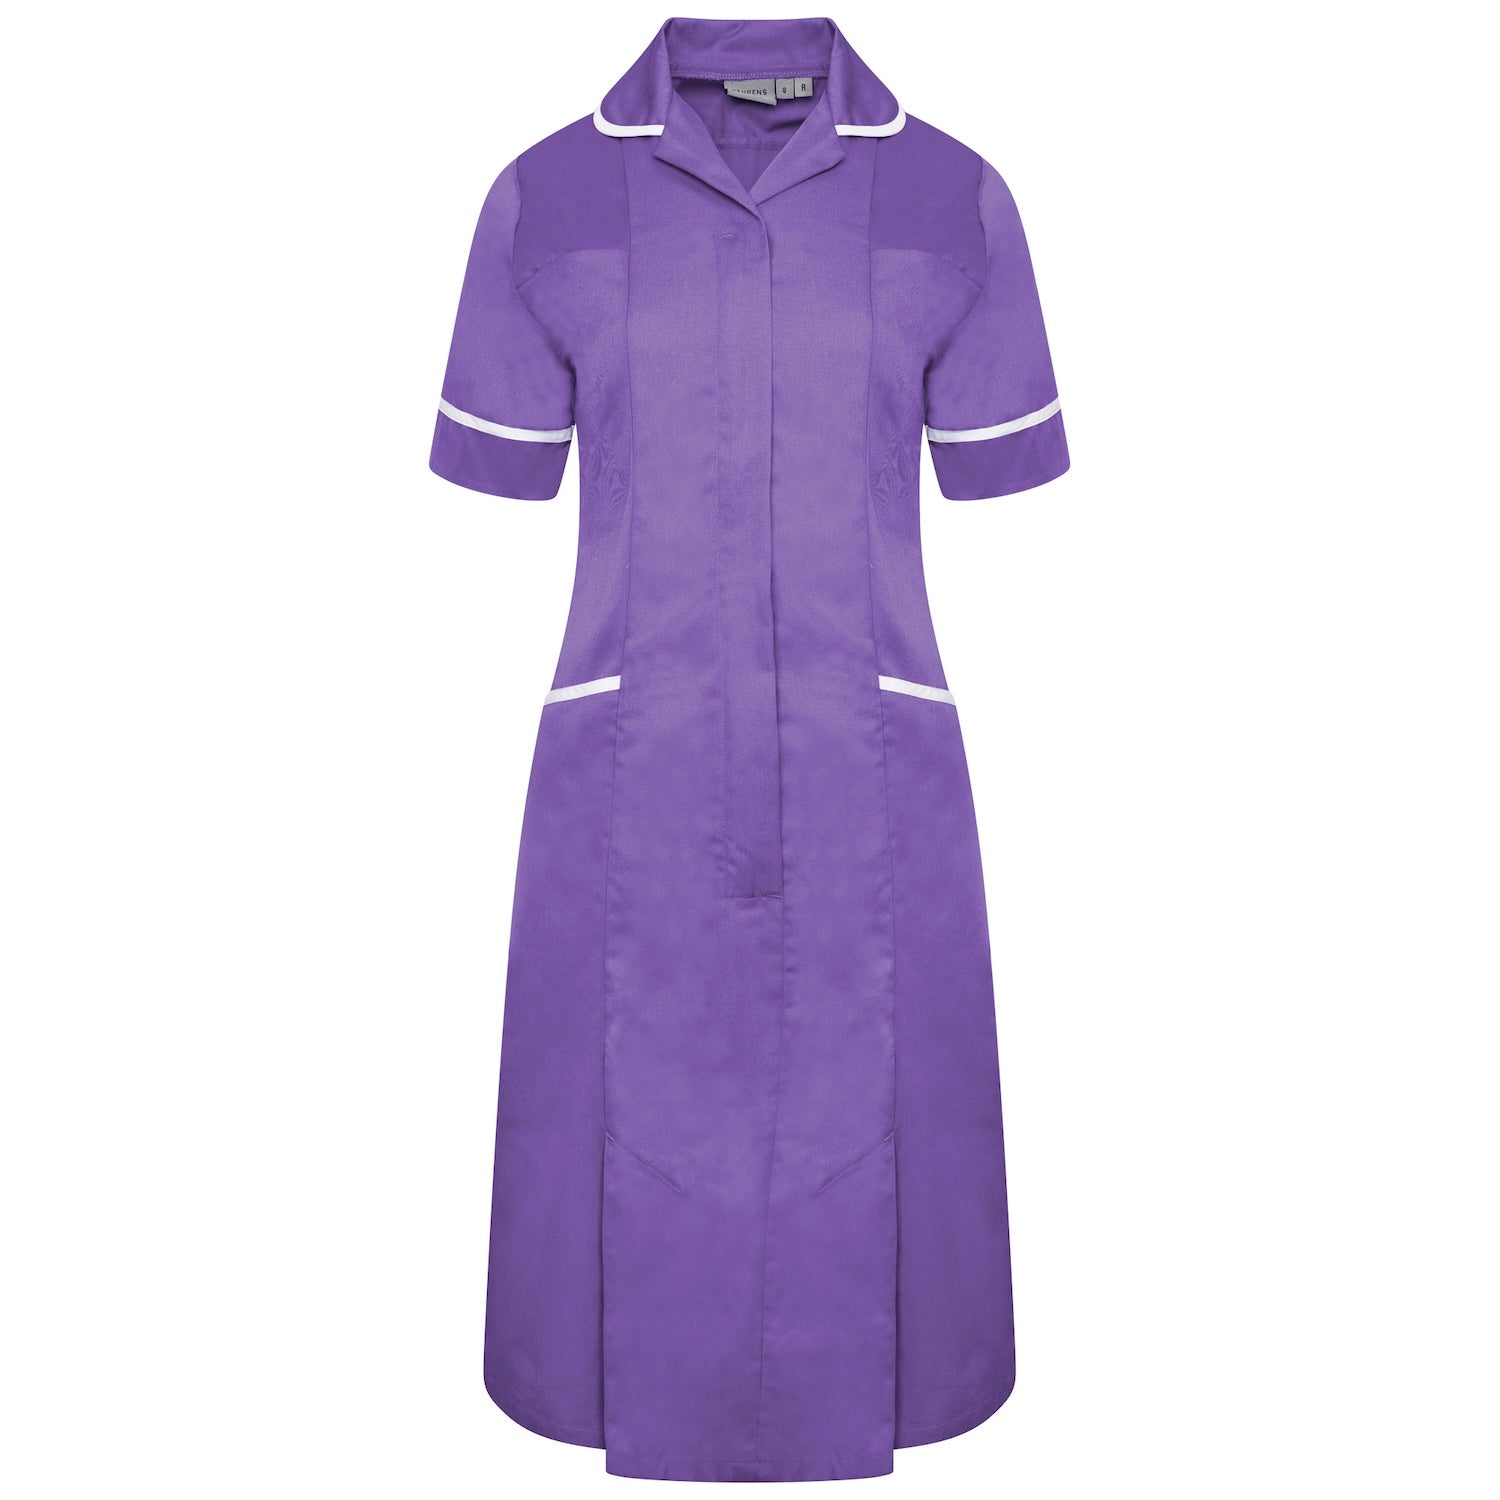 Ladies Healthcare Dress | Round Collar | Purple/White Trim